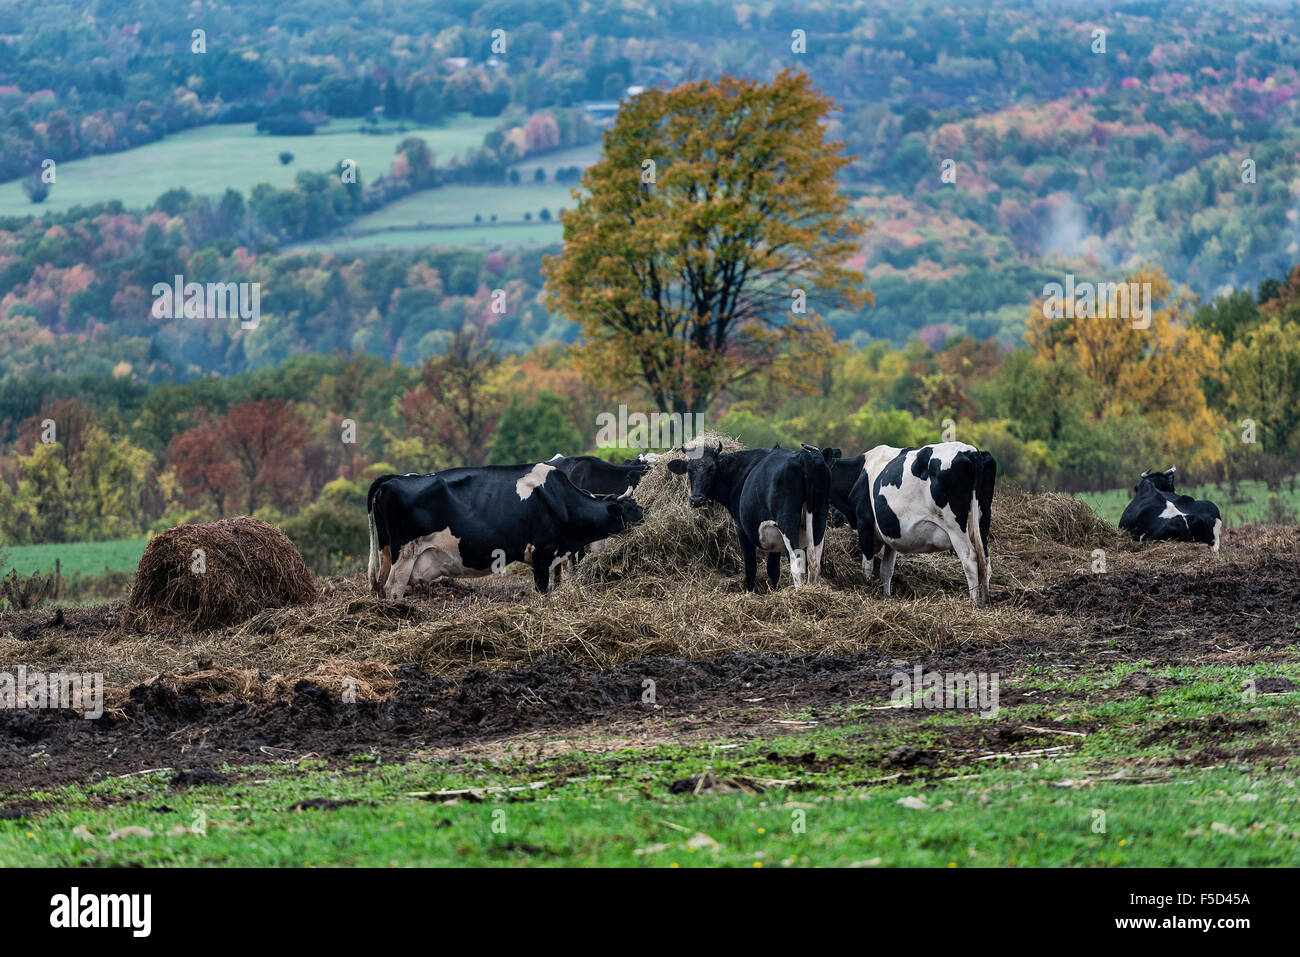 Steer graze on hay in a hilly autumn pasture, Watkins Glen, New York, USA Stock Photo